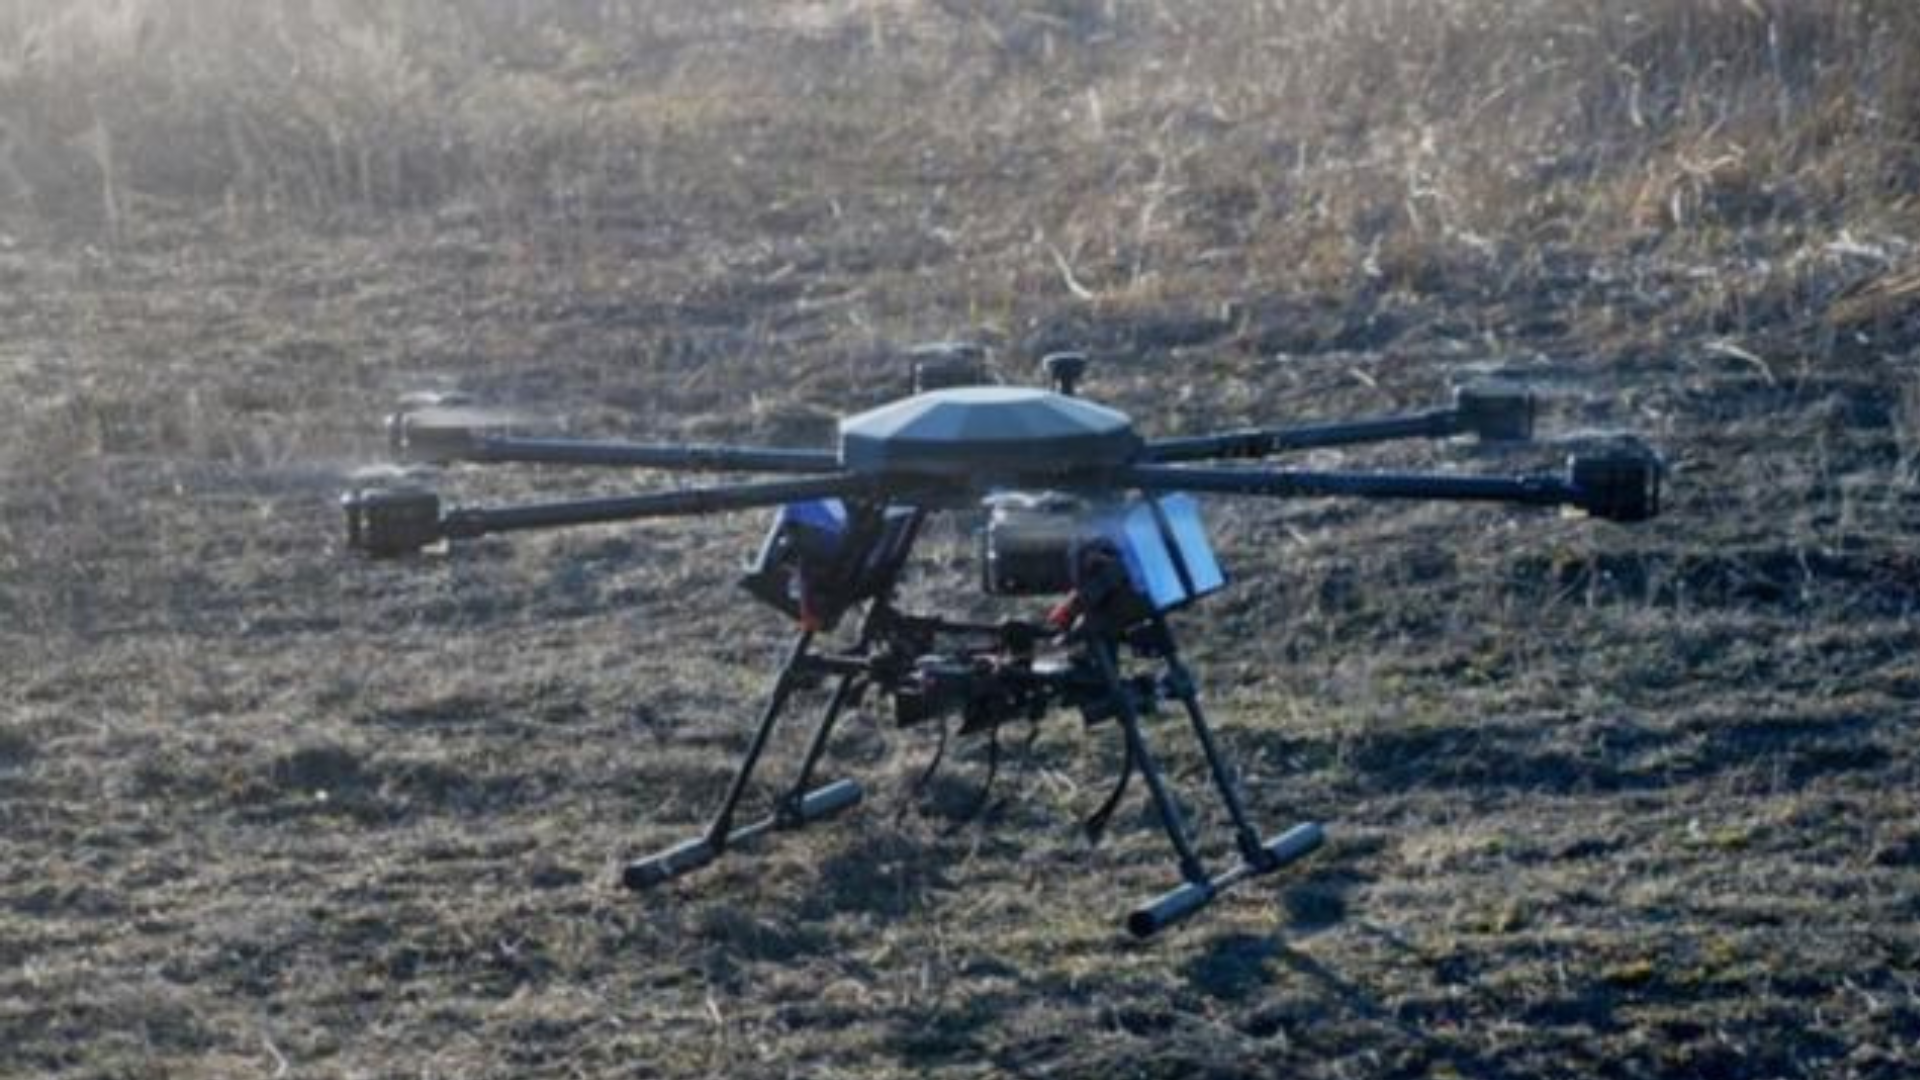 Cheap Ukrainian drones and robots deter Russian ambitions